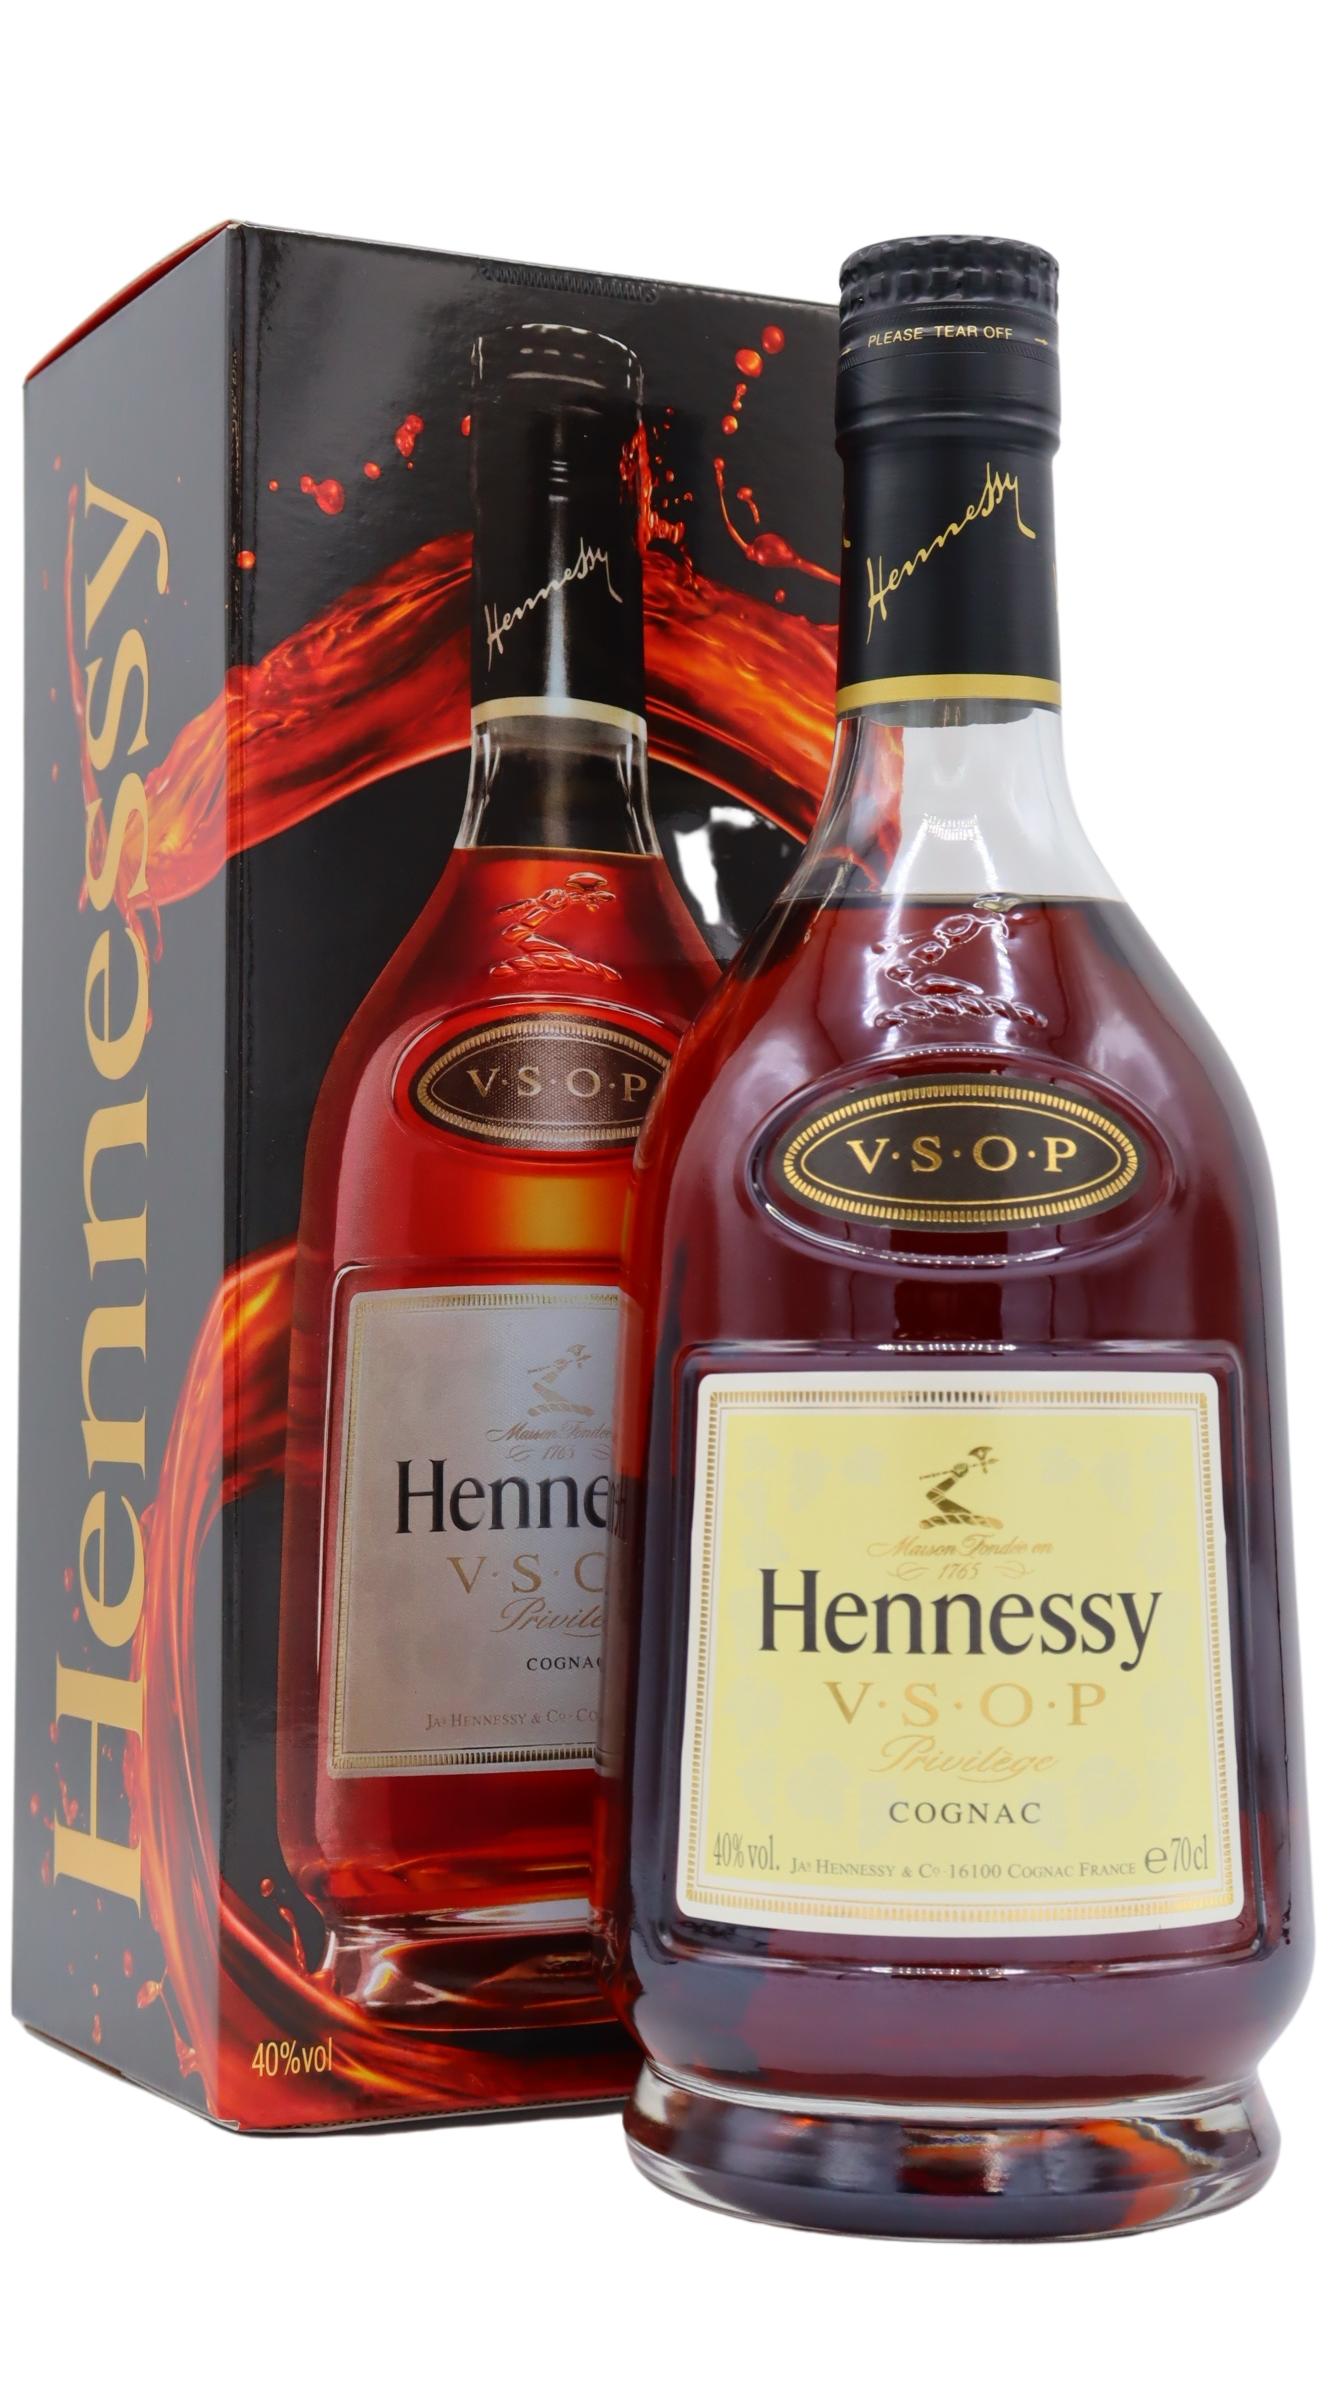 Hennessy V.S.O.P. Cognac - Hennessy Cognac